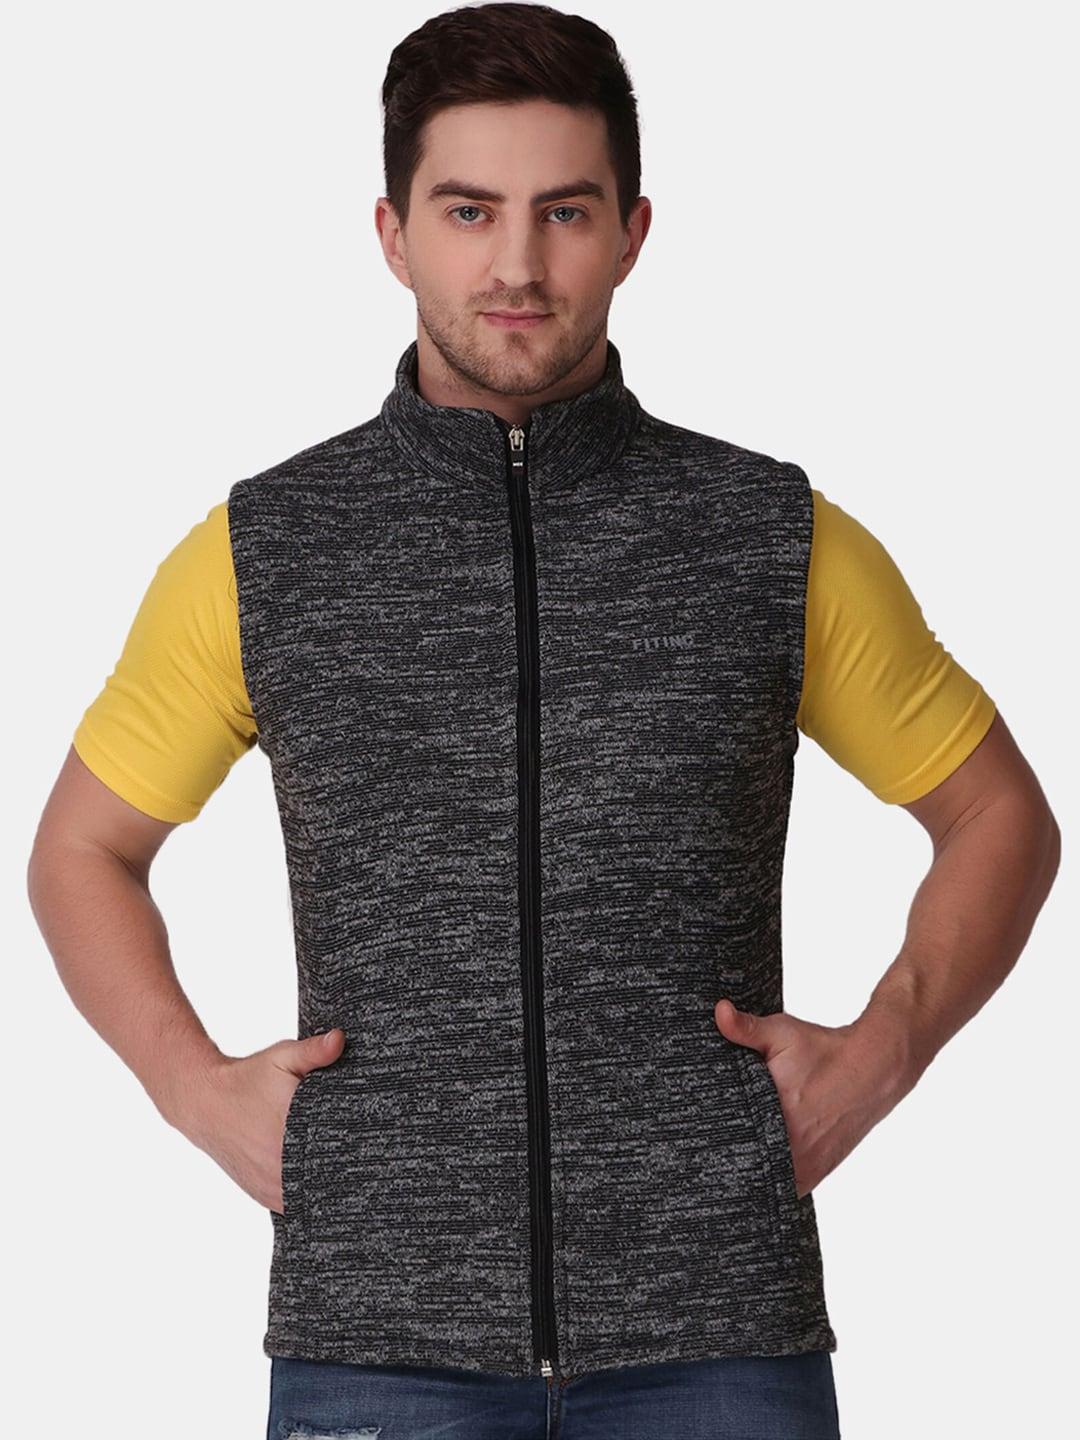 fitinc men black striped fleece e-dry technology sporty jacket